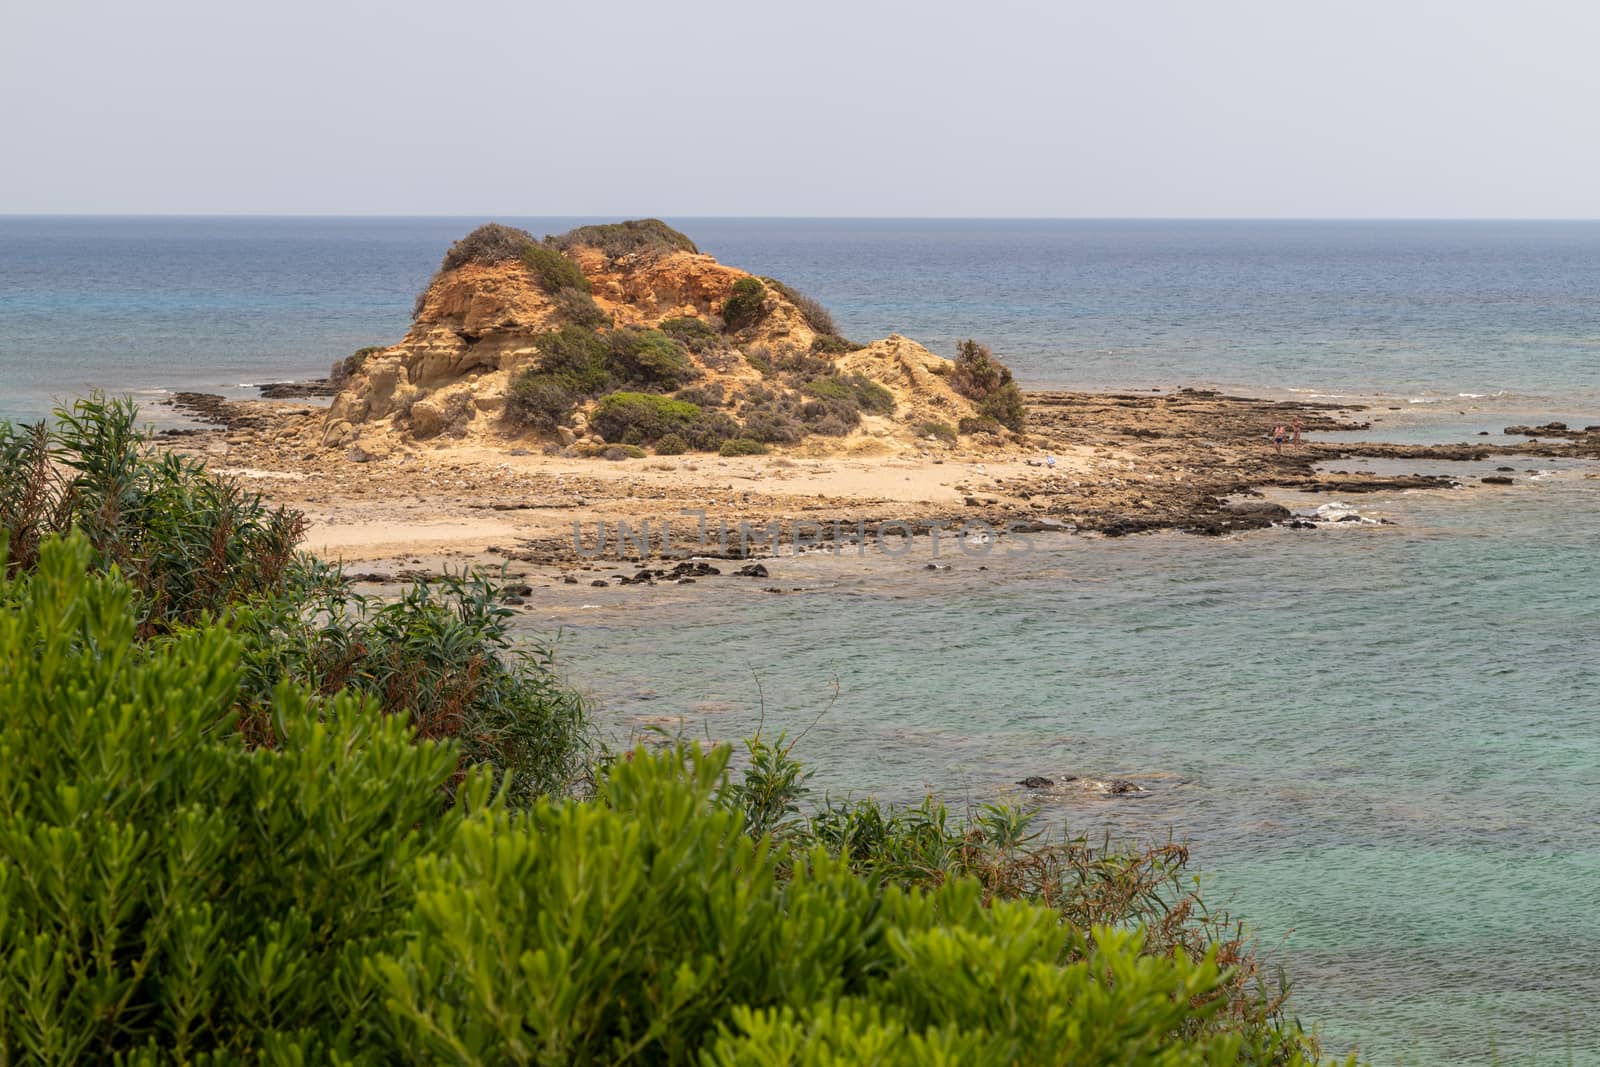 Rocky coastline at the beach of Kiotari on Rhodes island, Greece in summer at a sunny day